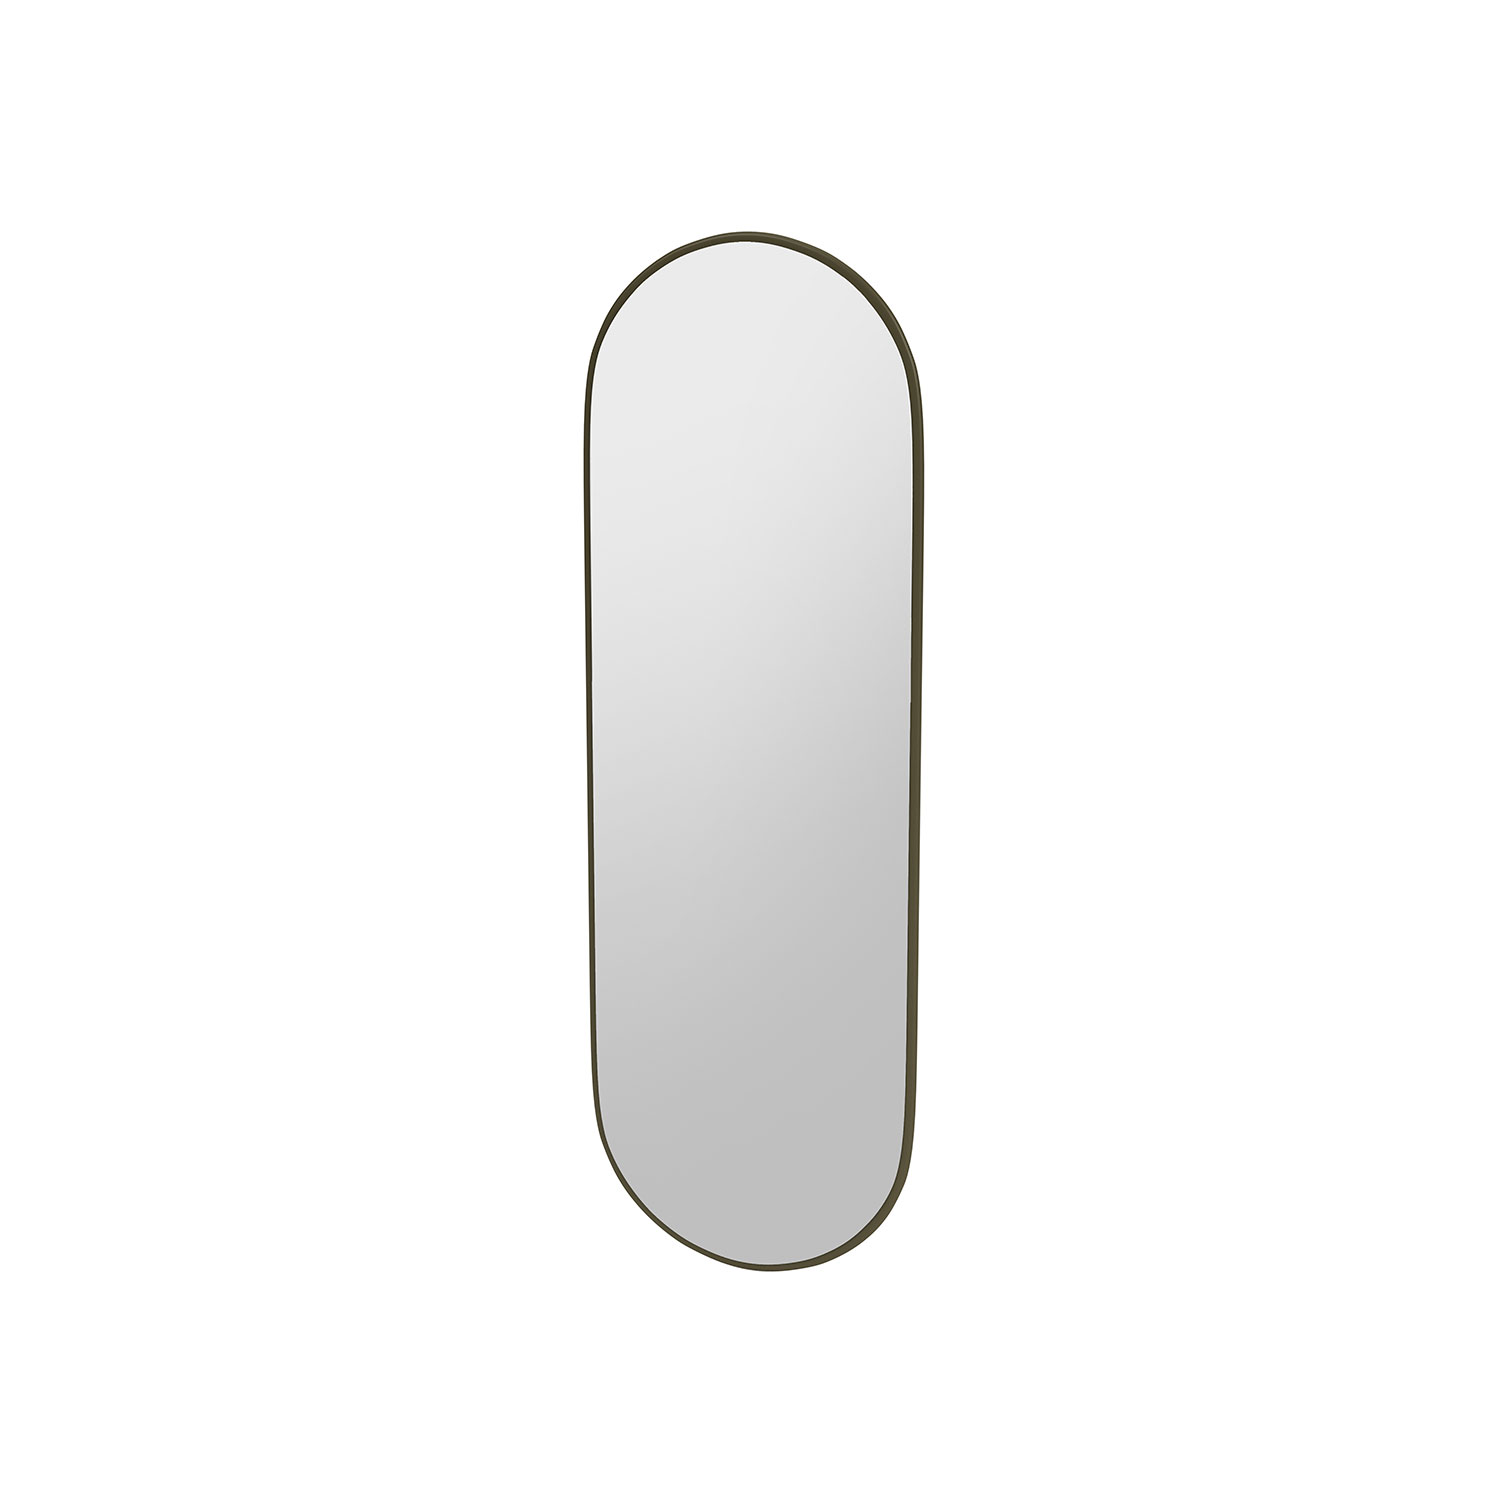 FIGURE oval mirror, Oregano